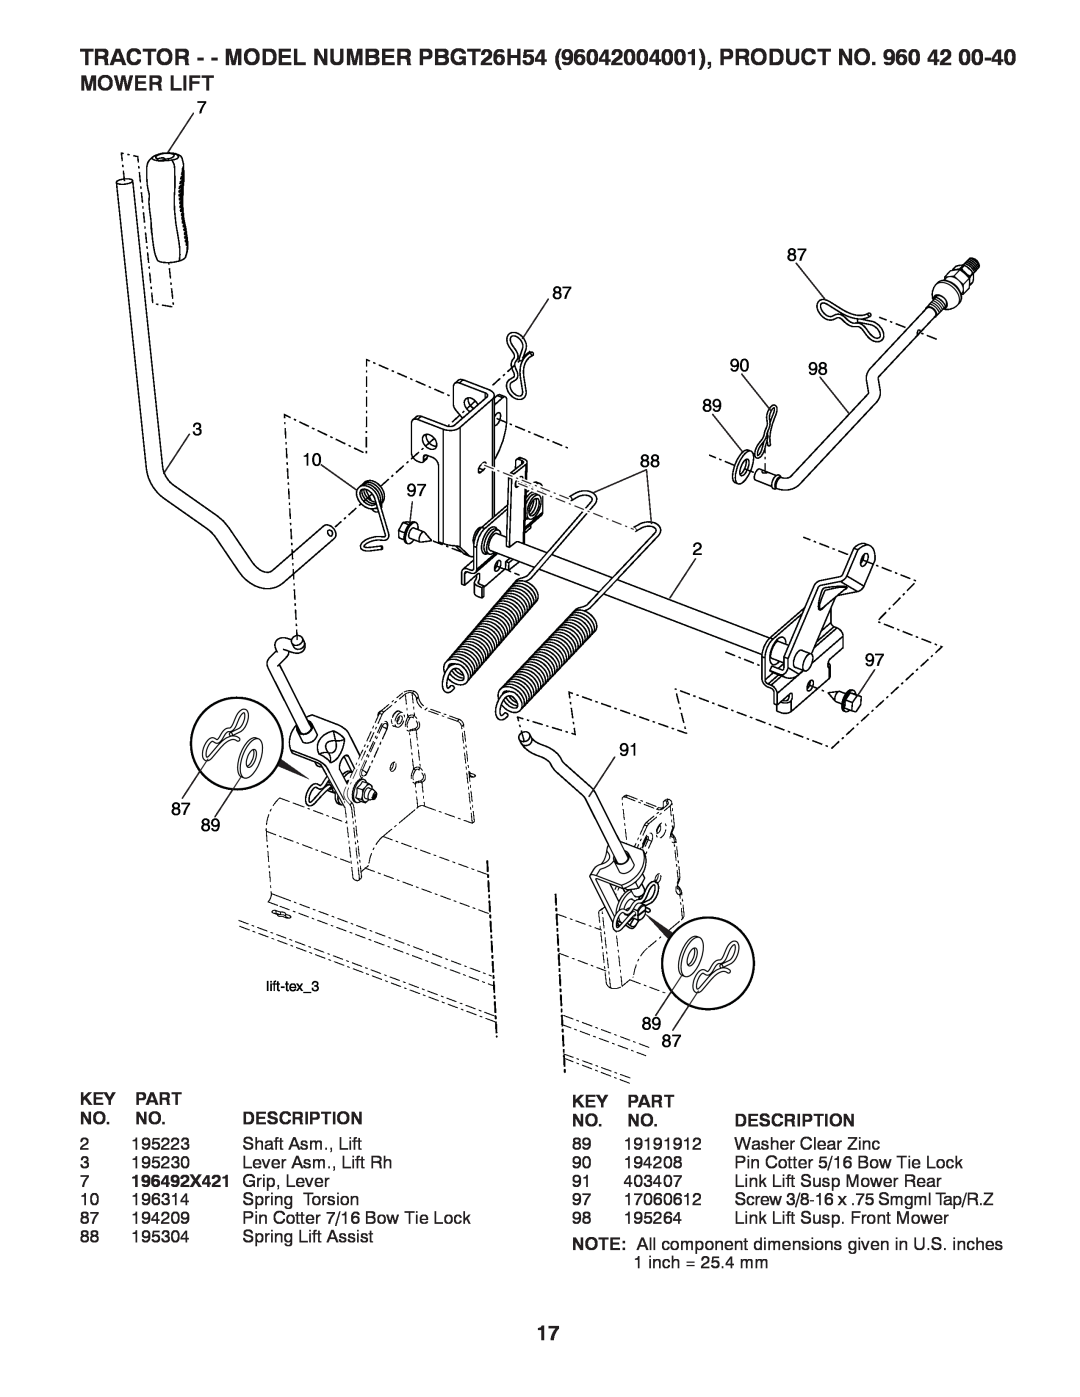 Poulan 960 42 00-40 manual Mower Lift, TRACTOR - - MODEL NUMBER PBGT26H54 96042004001, PRODUCT NO. 960 42, lift-tex3 